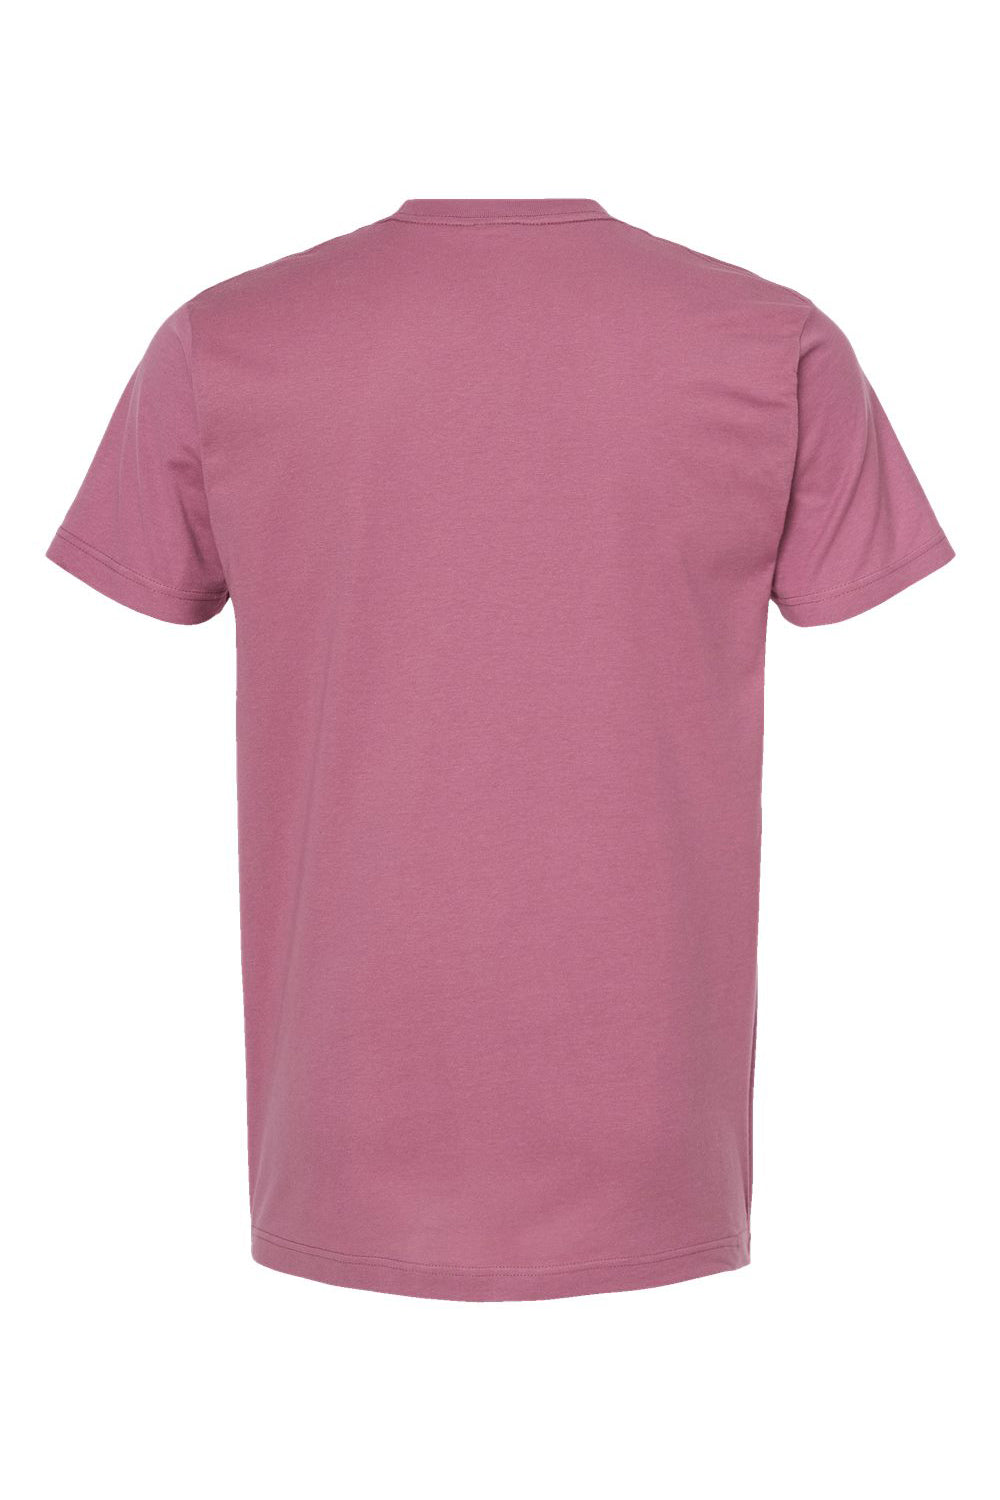 Tultex 202 Mens Fine Jersey Short Sleeve Crewneck T-Shirt Cassis Pink Flat Back